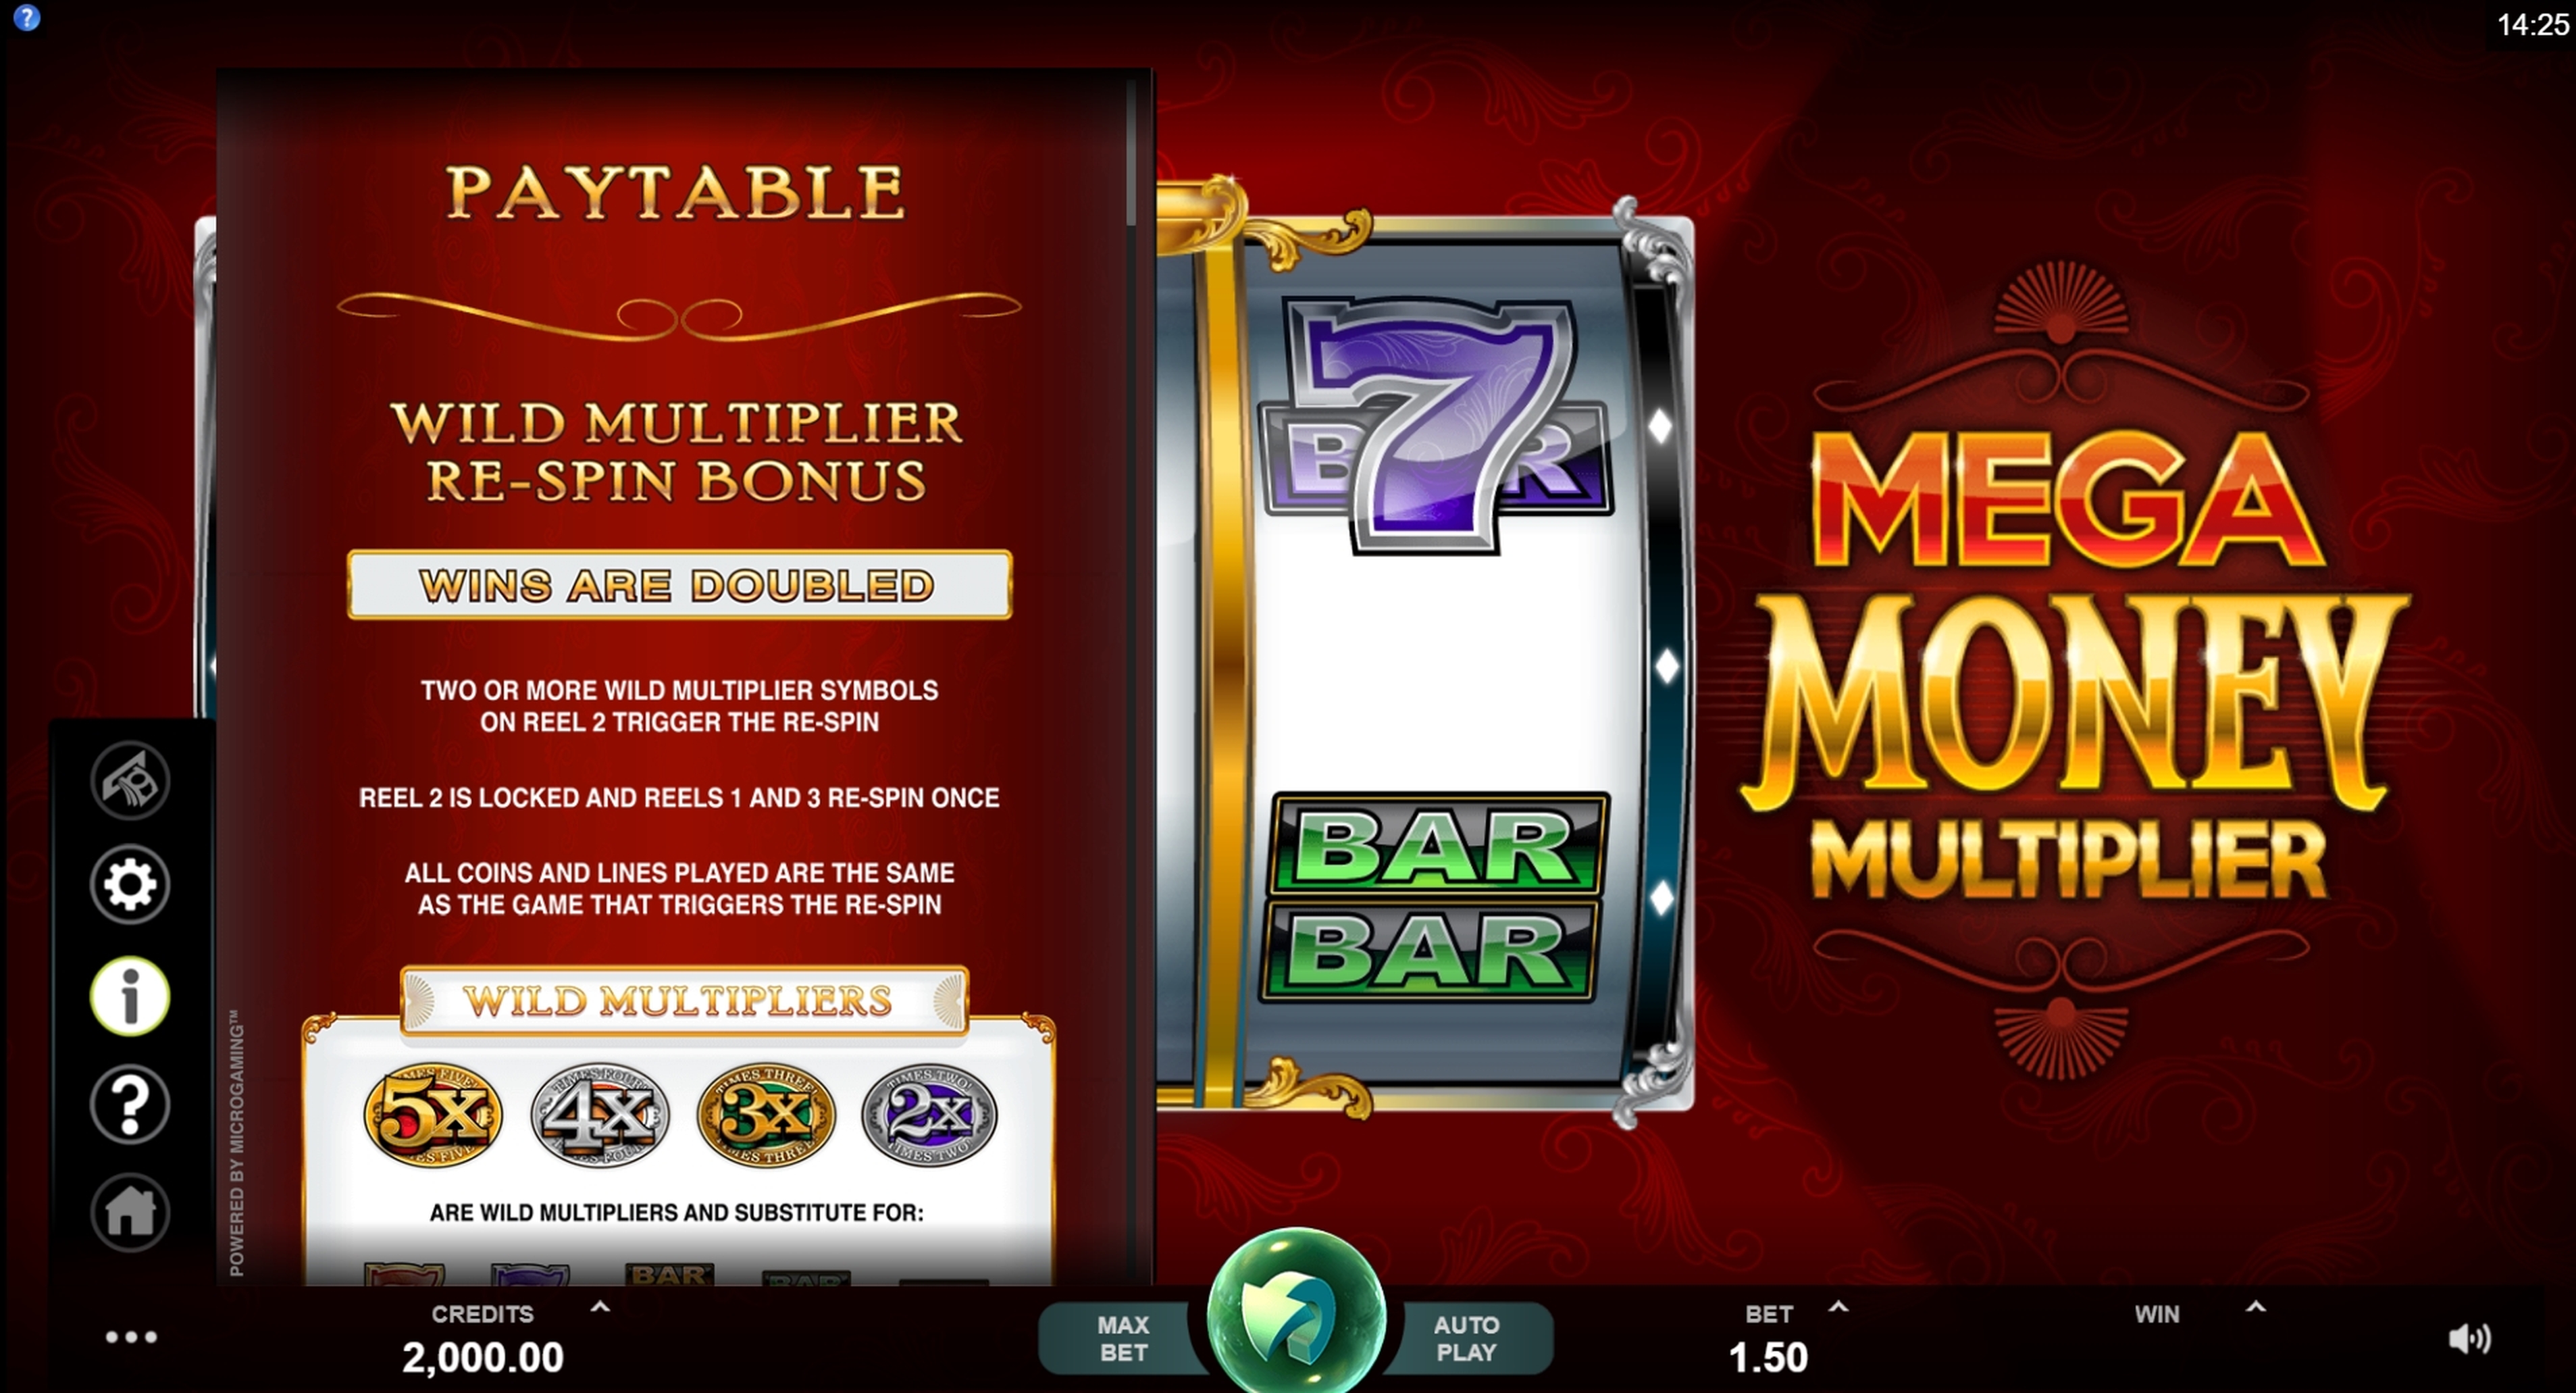 Info of Mega Money Multiplier Slot Game by MahiGaming